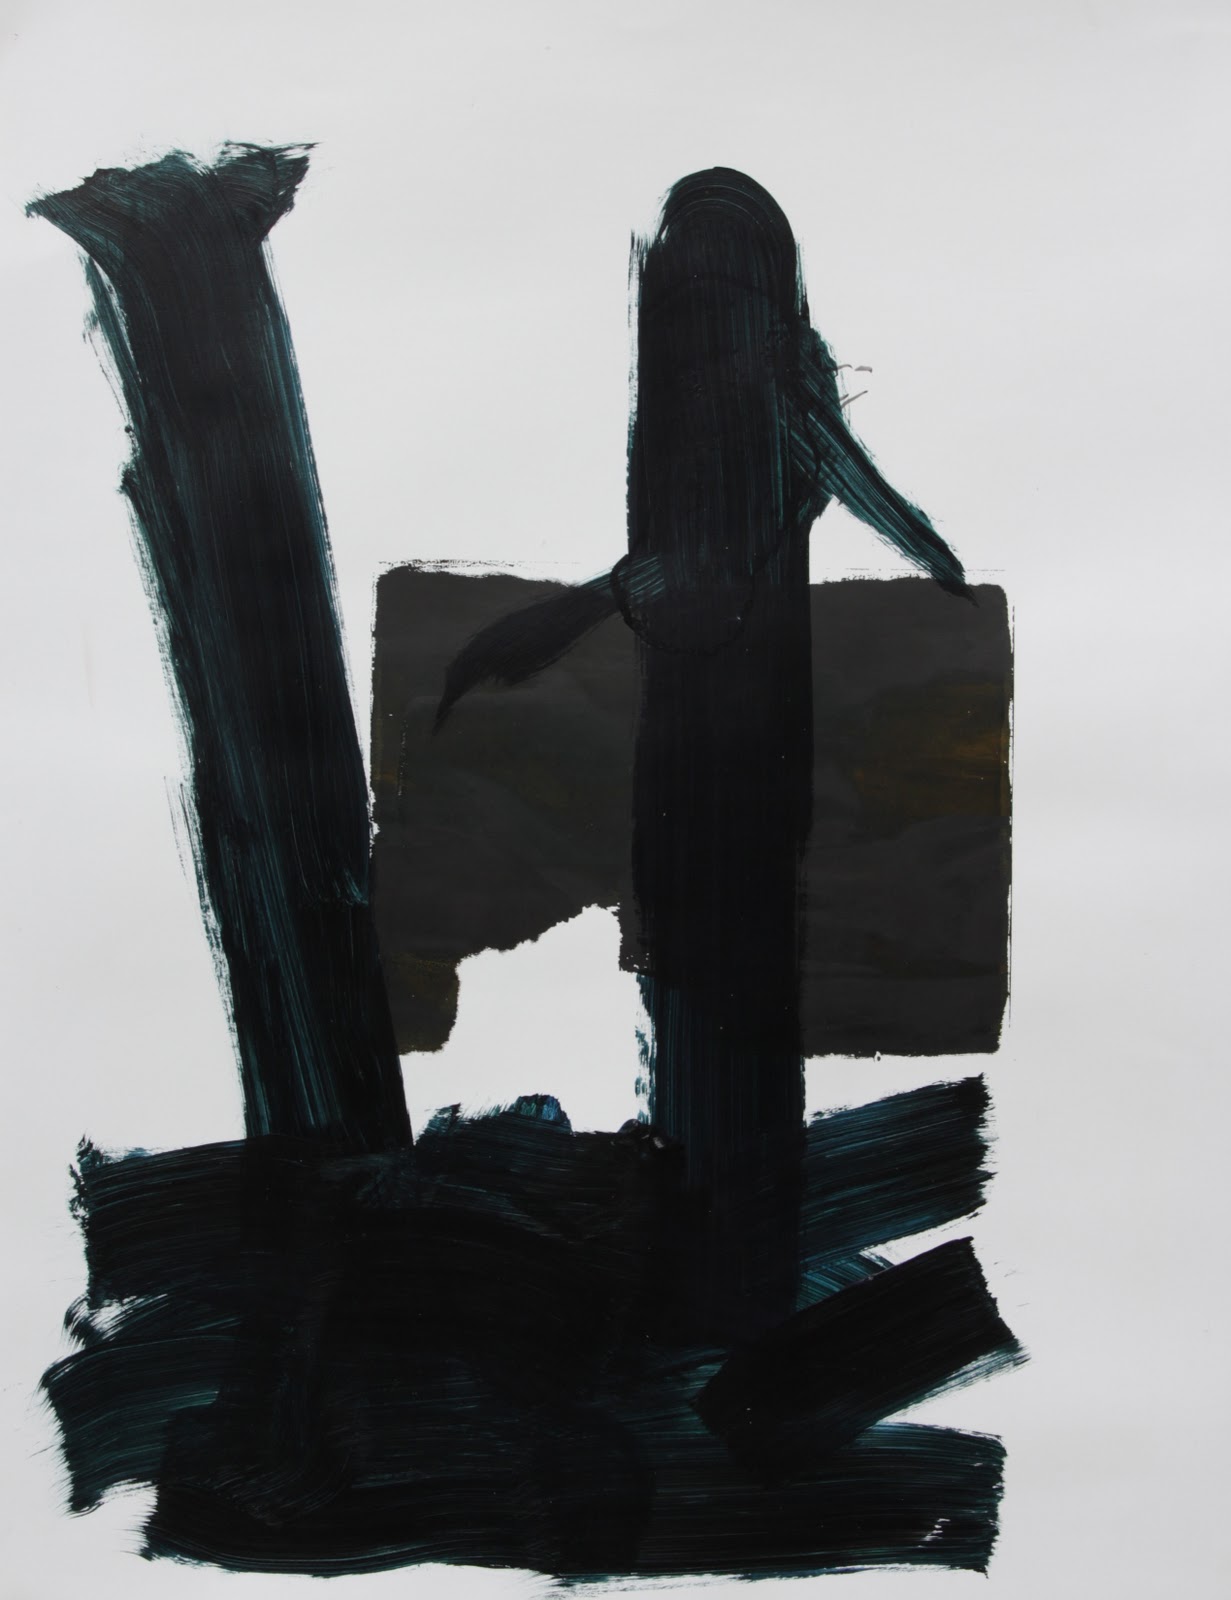 Emma Smith, "Blue Figure with Tree" (2009).